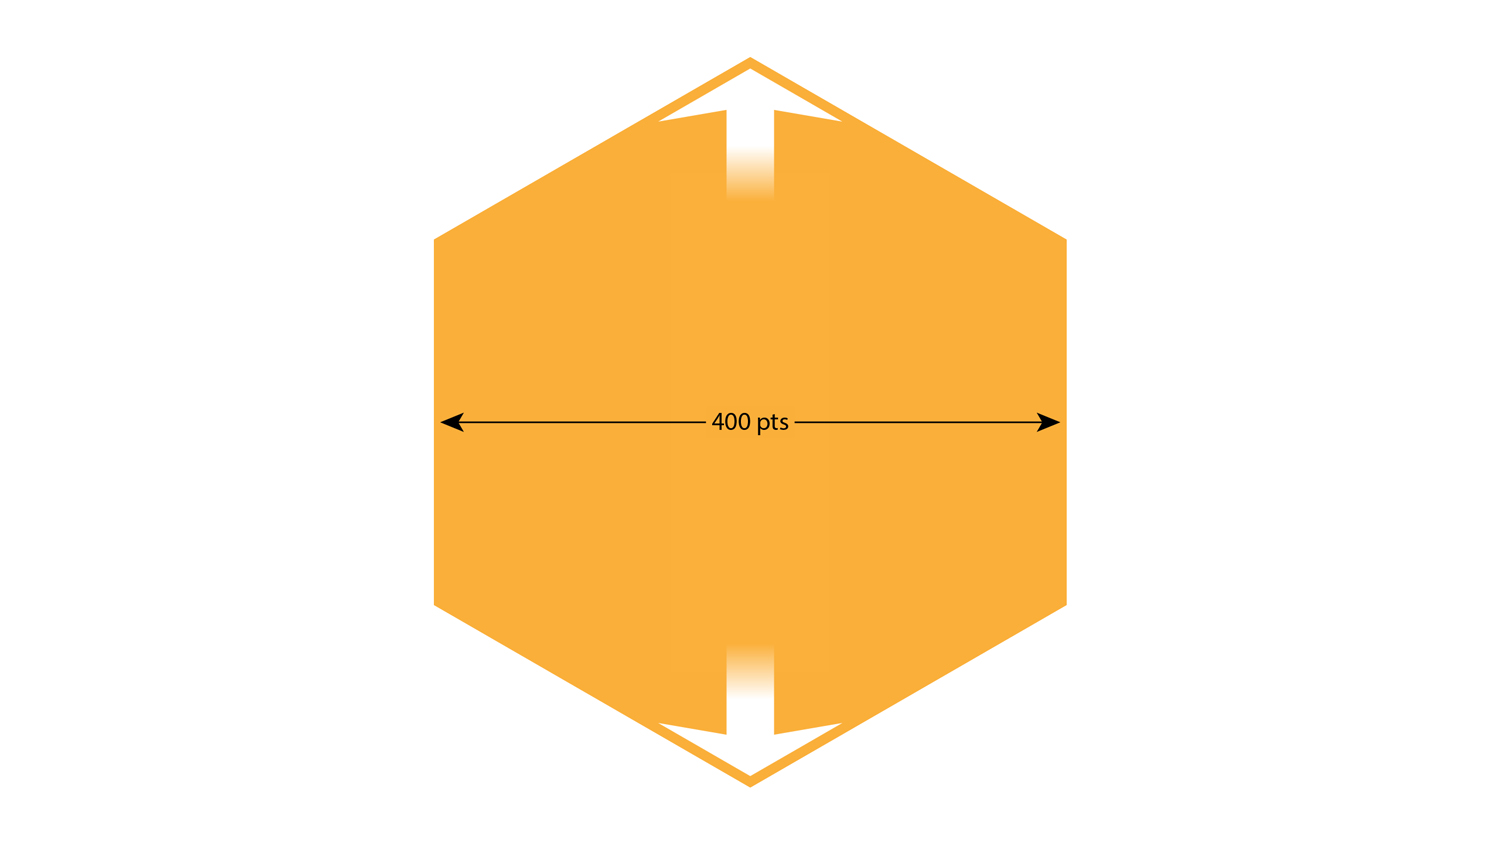 A hexagon that measures 400 px across